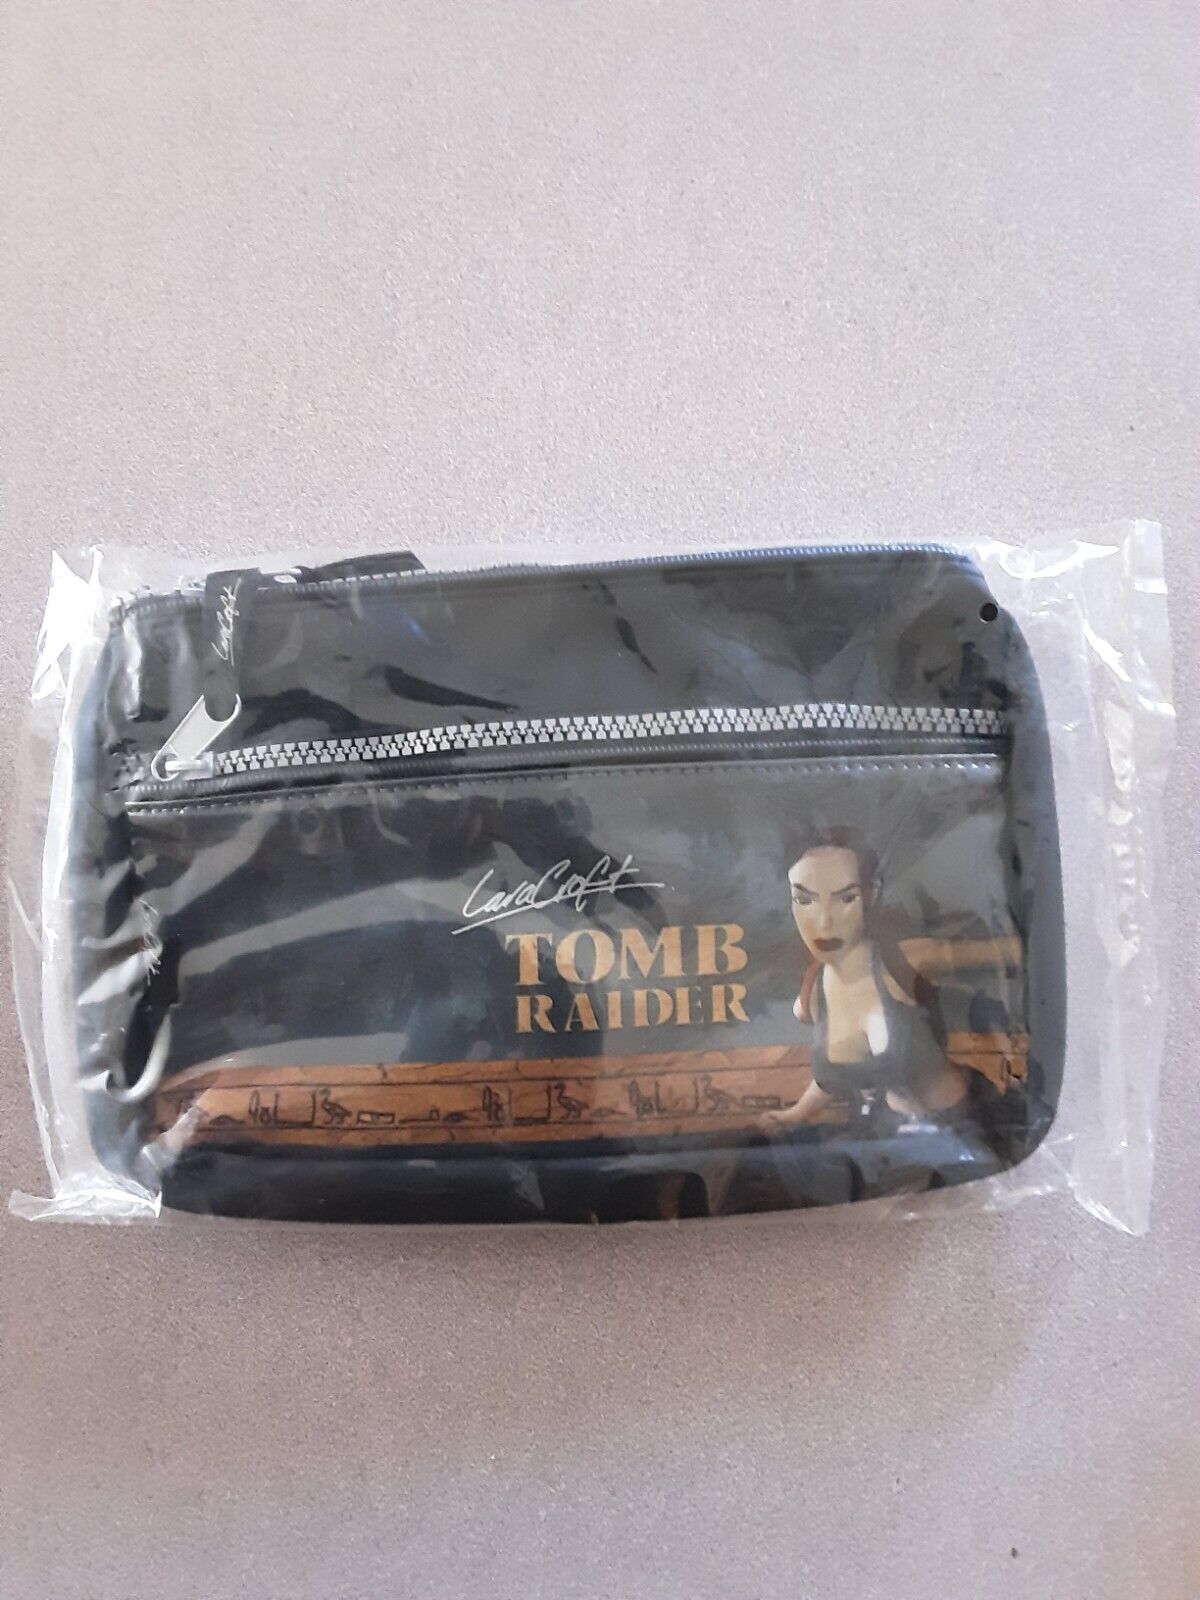 Tomb Raider Lara Croft Pencil Case Official Merchandise 